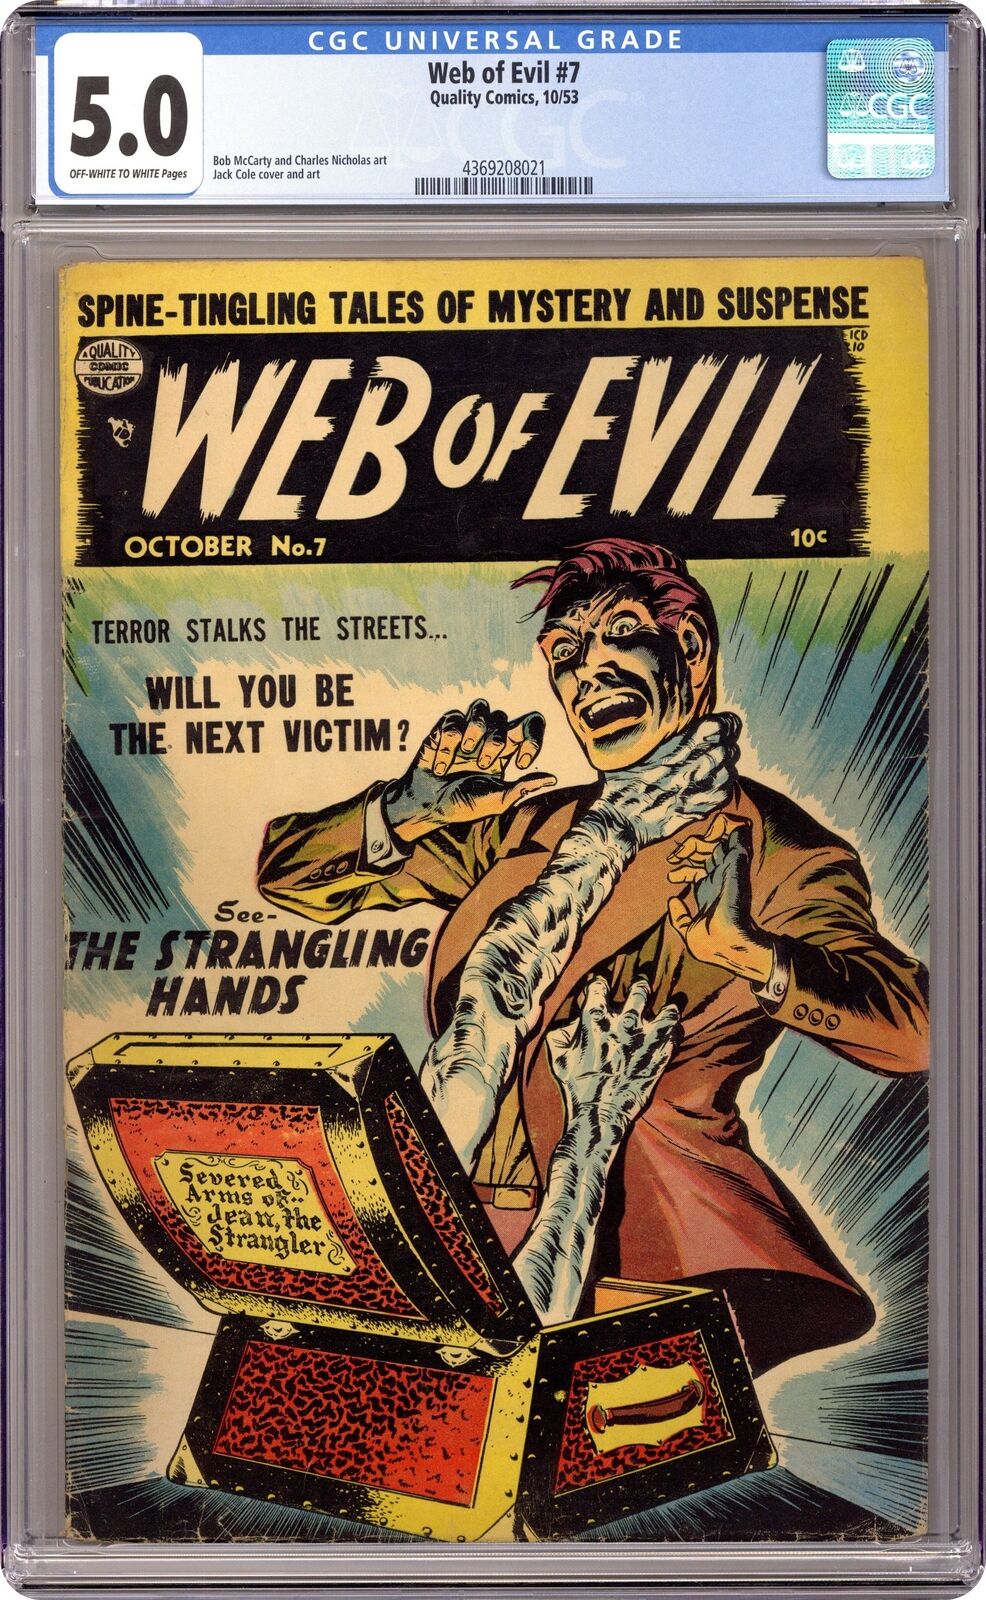 Web of Evil #7 CGC 5.0 1953 4369208021